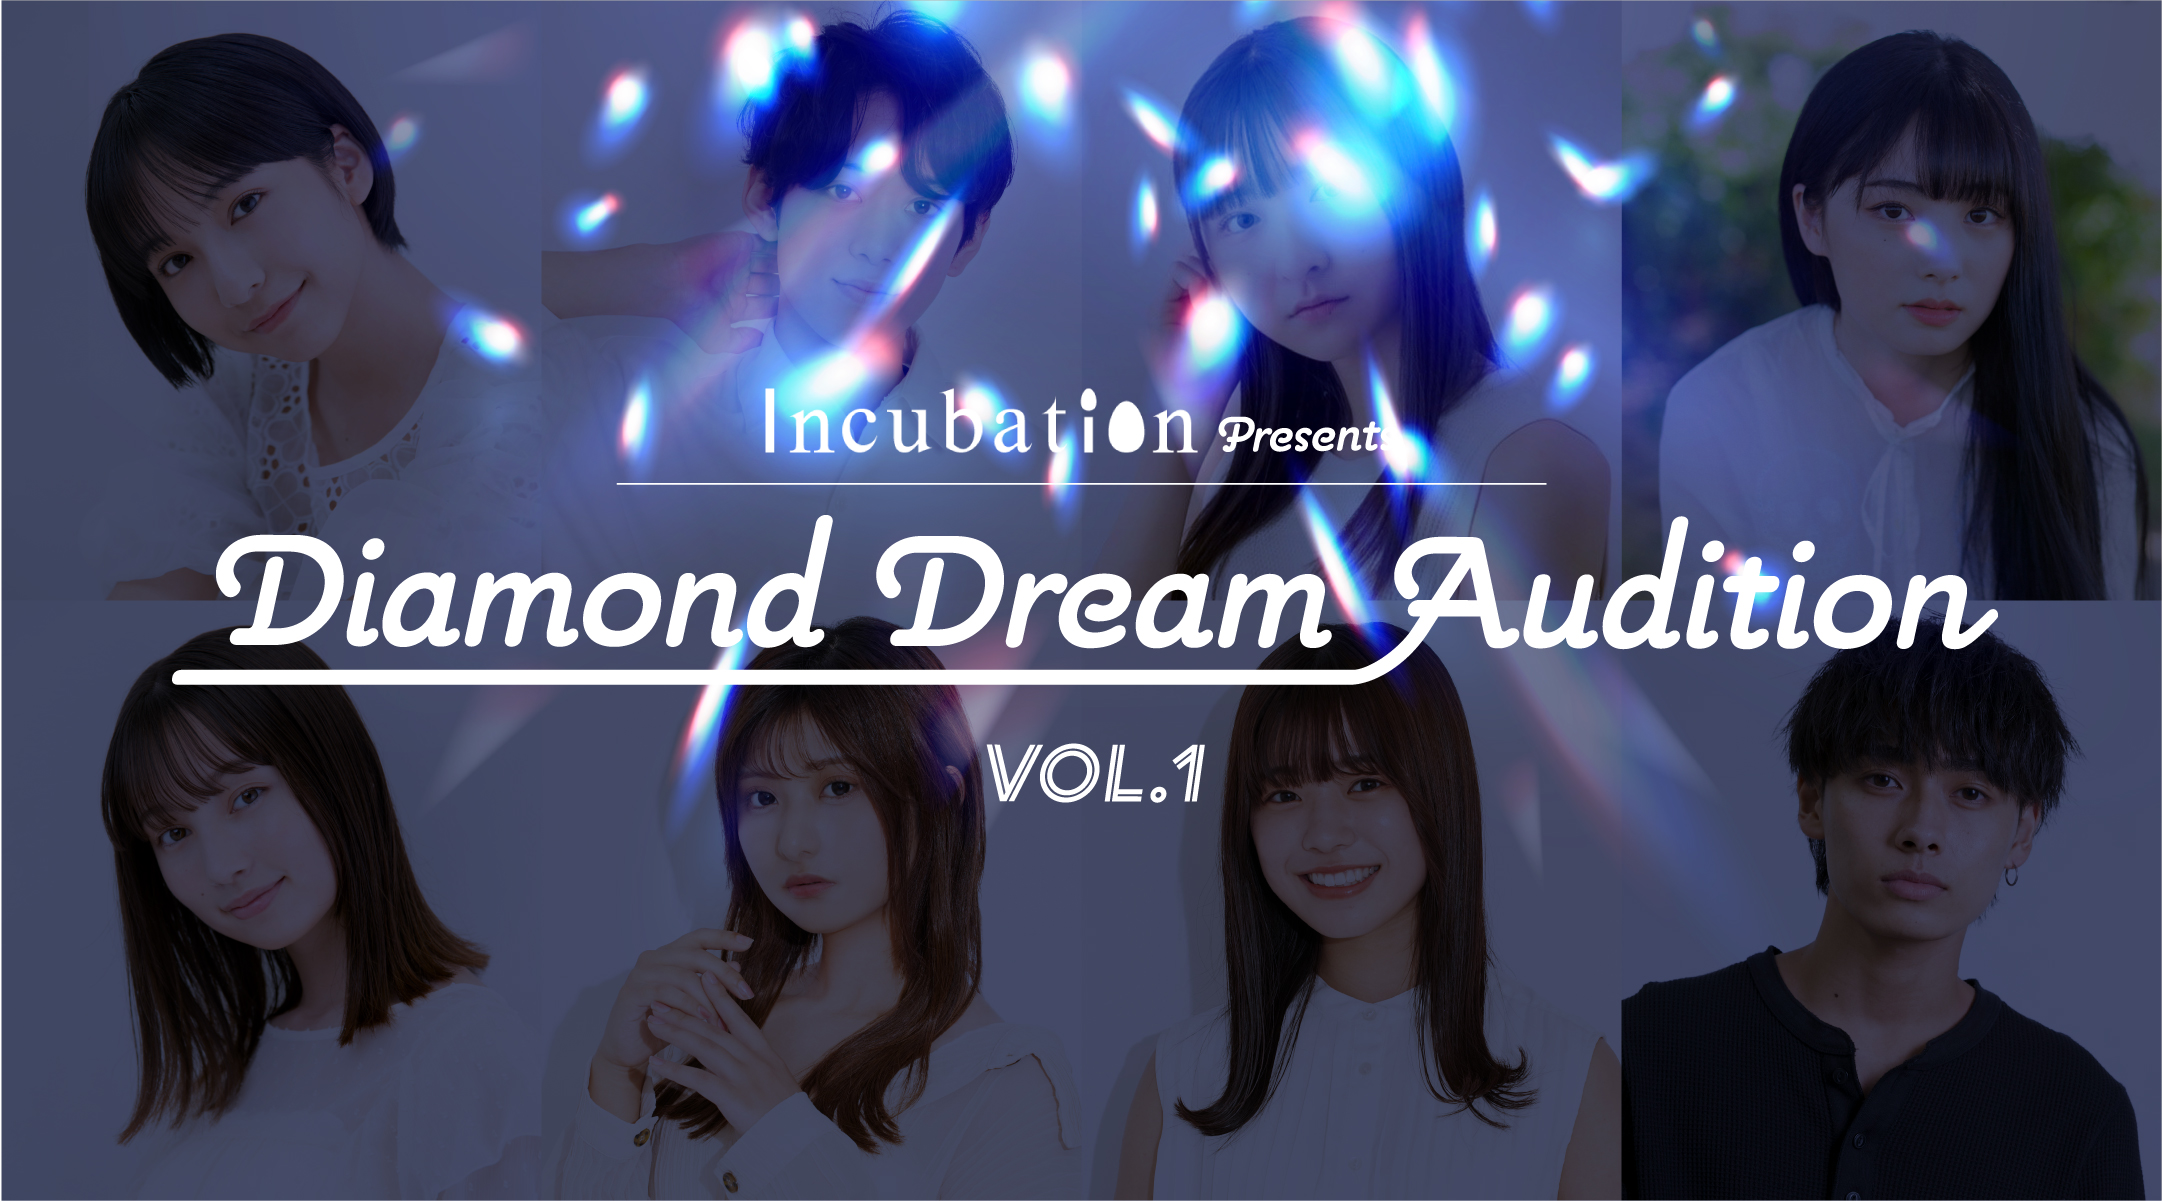 Incubation presents Diamond Dream Audition VOL.1